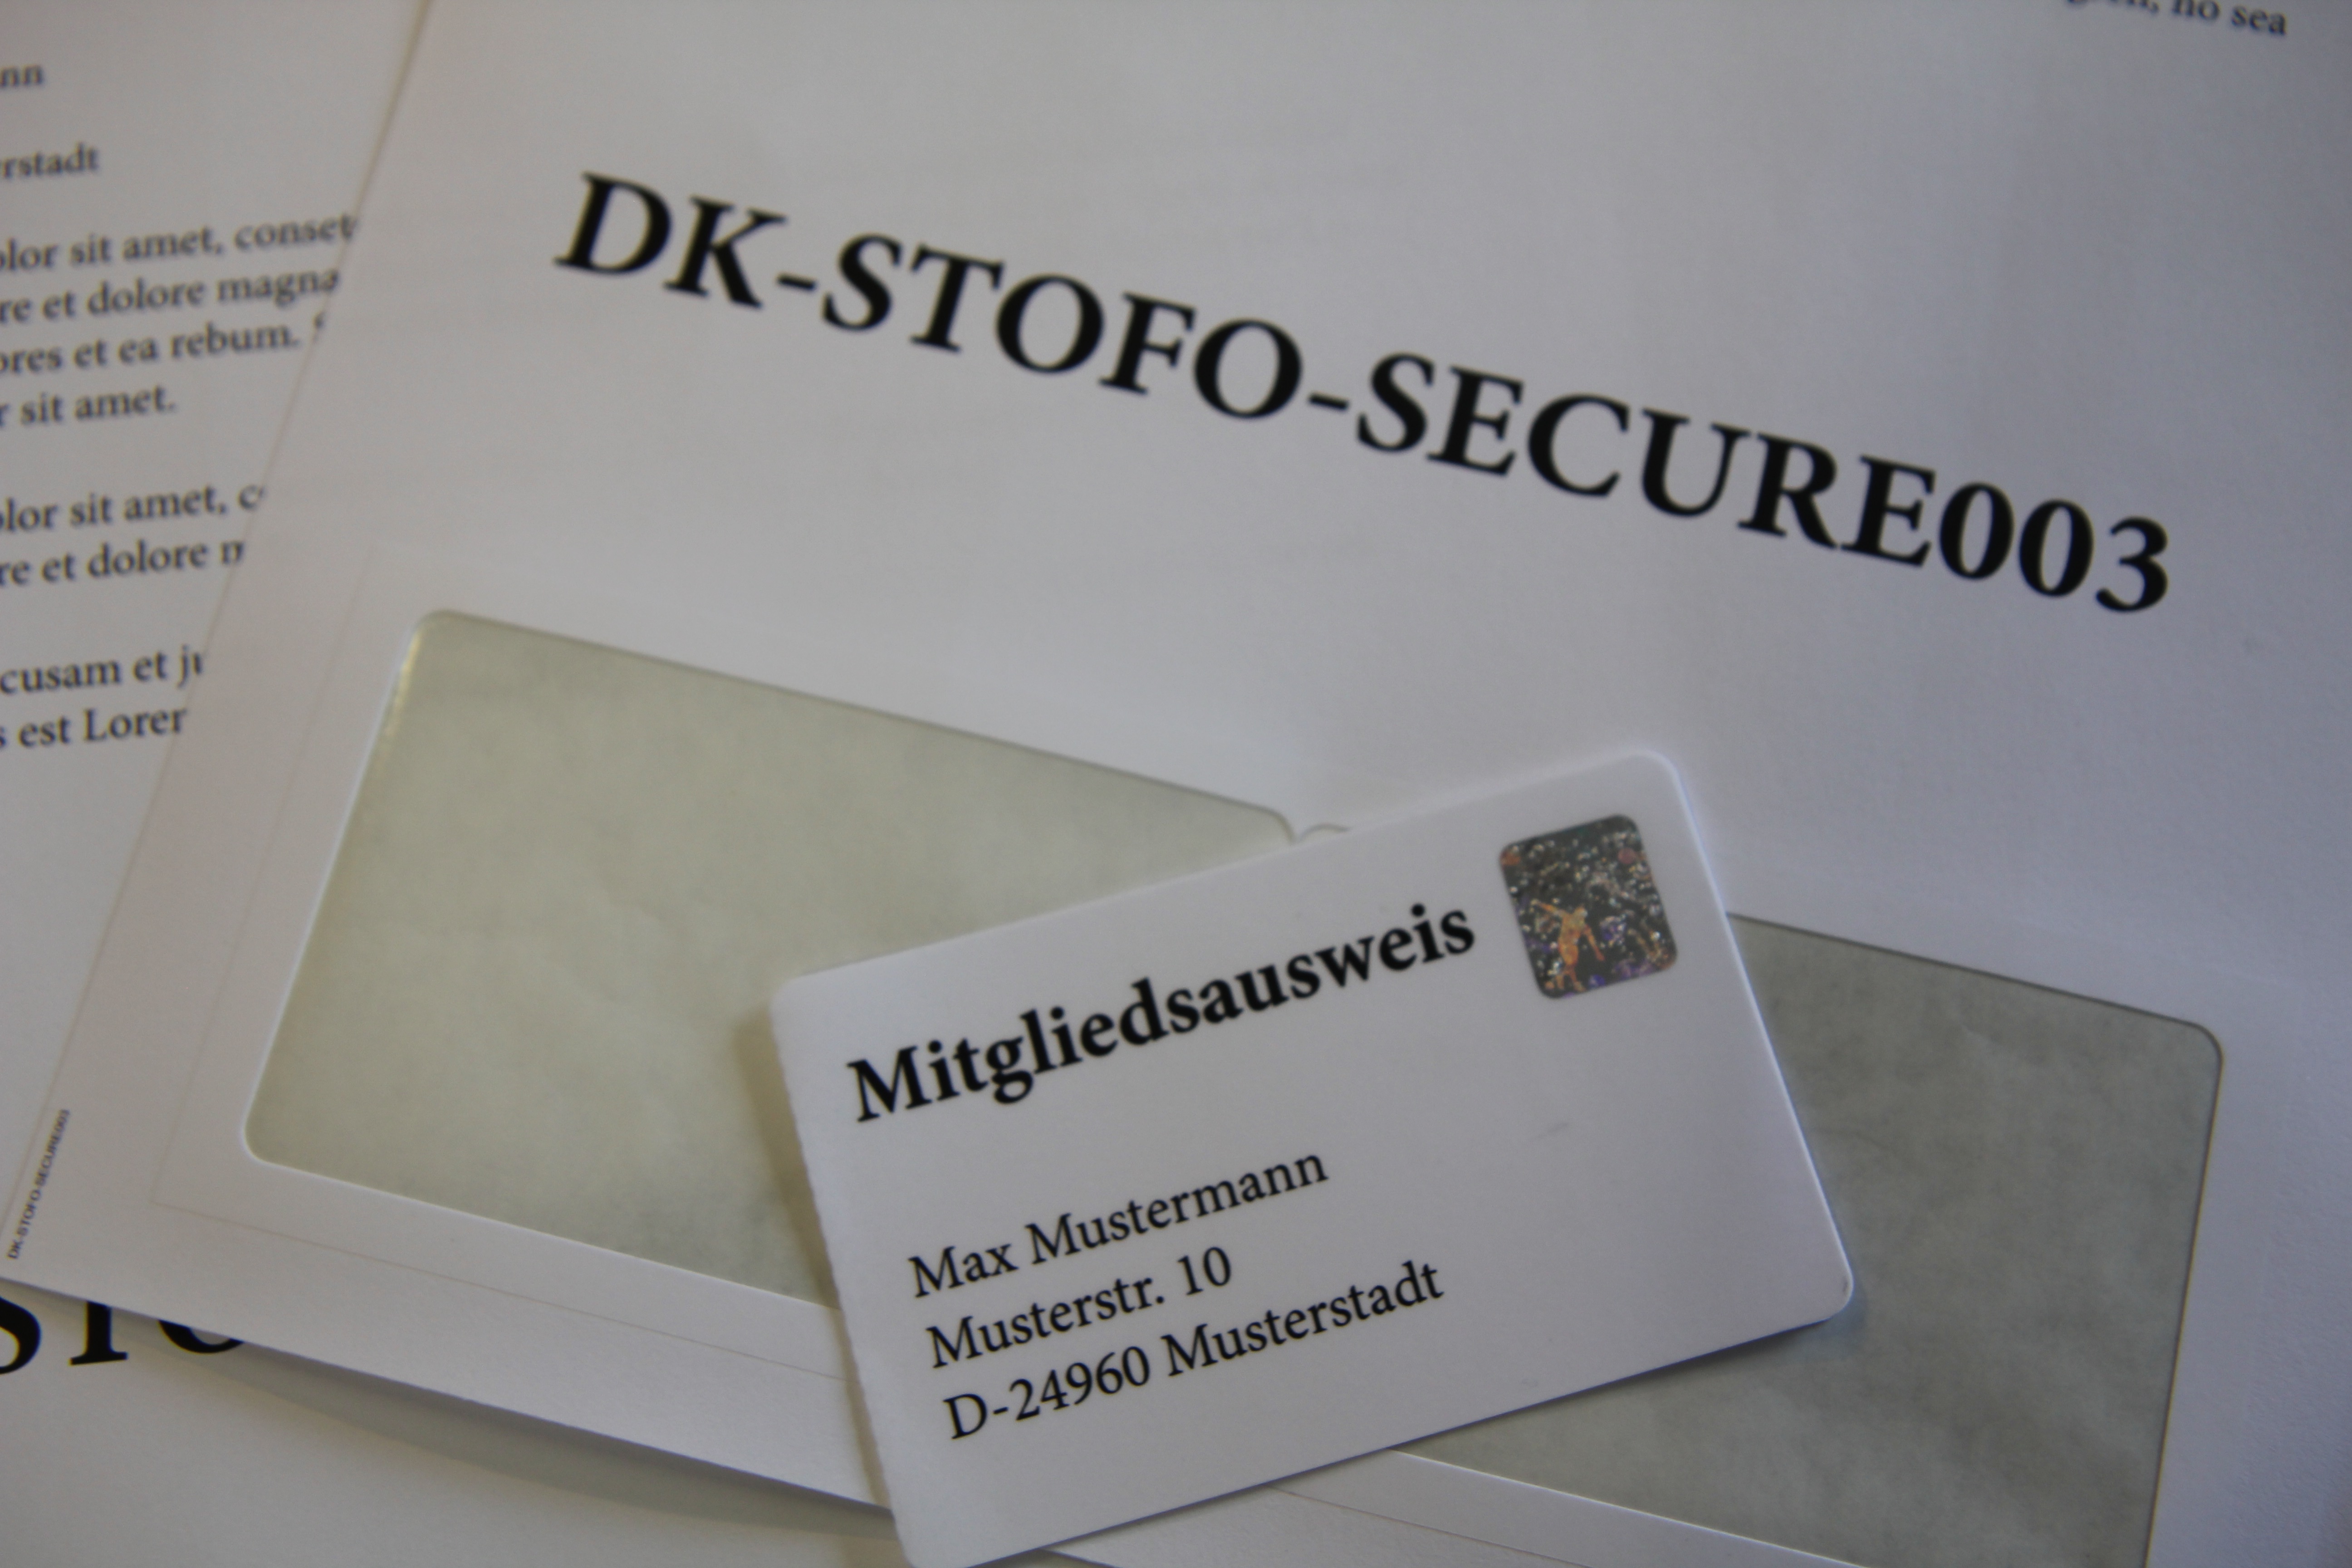 DK-STOFO-SECURE003 Box